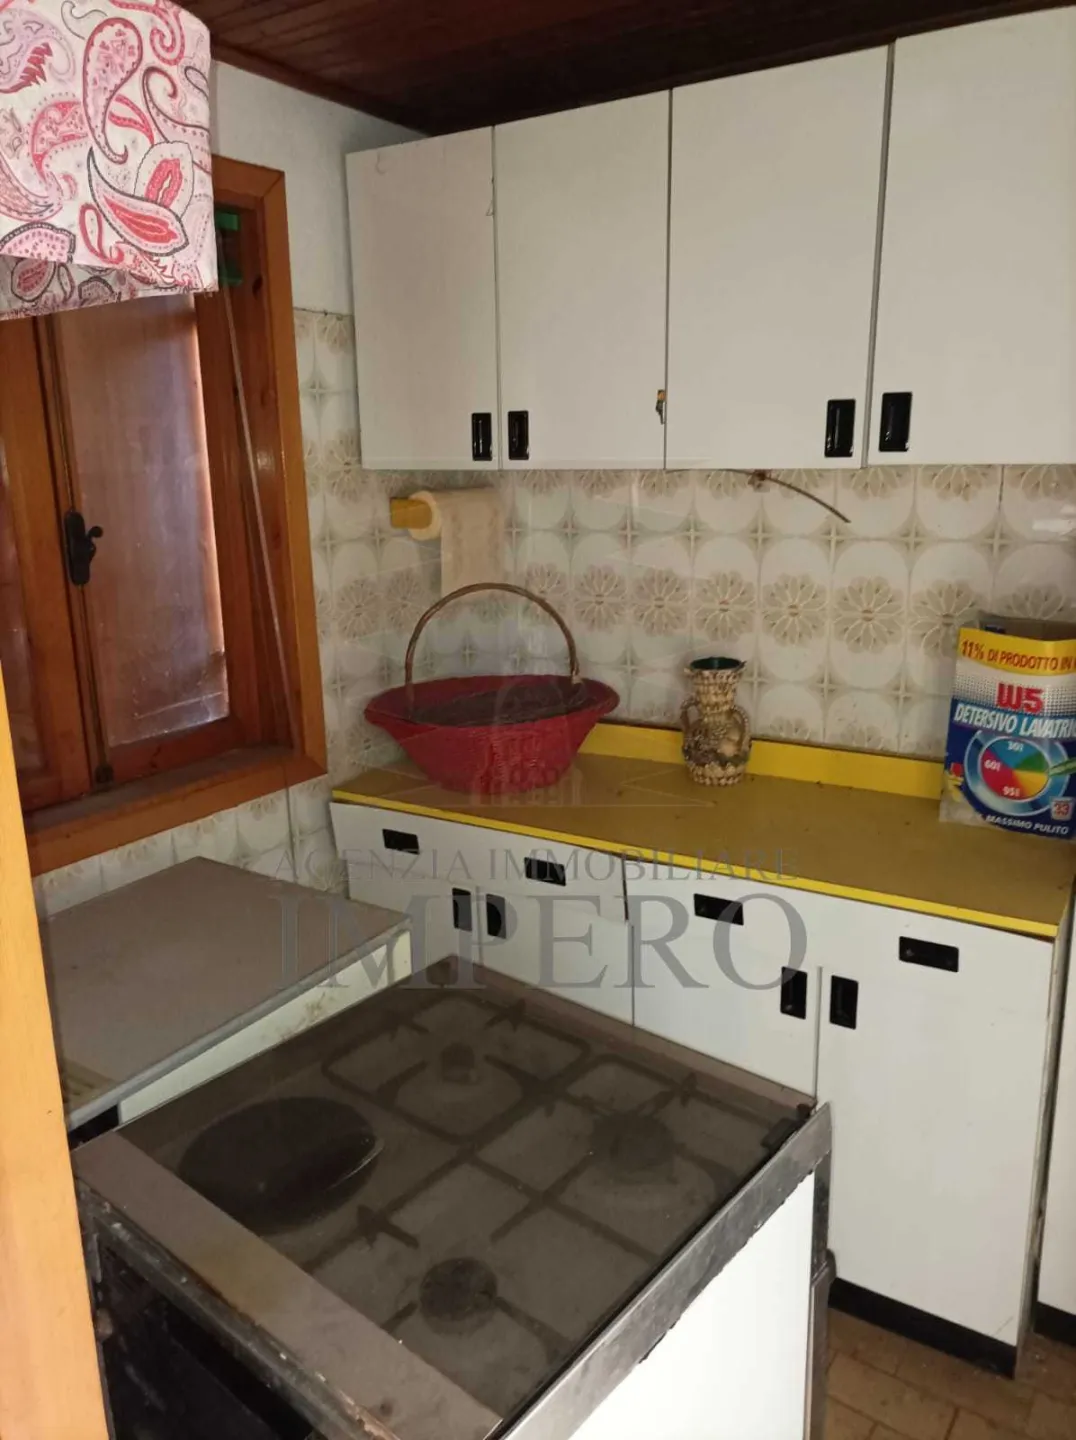 Immagine per Porzione di casa in vendita a Olivetta San Michele via Serro